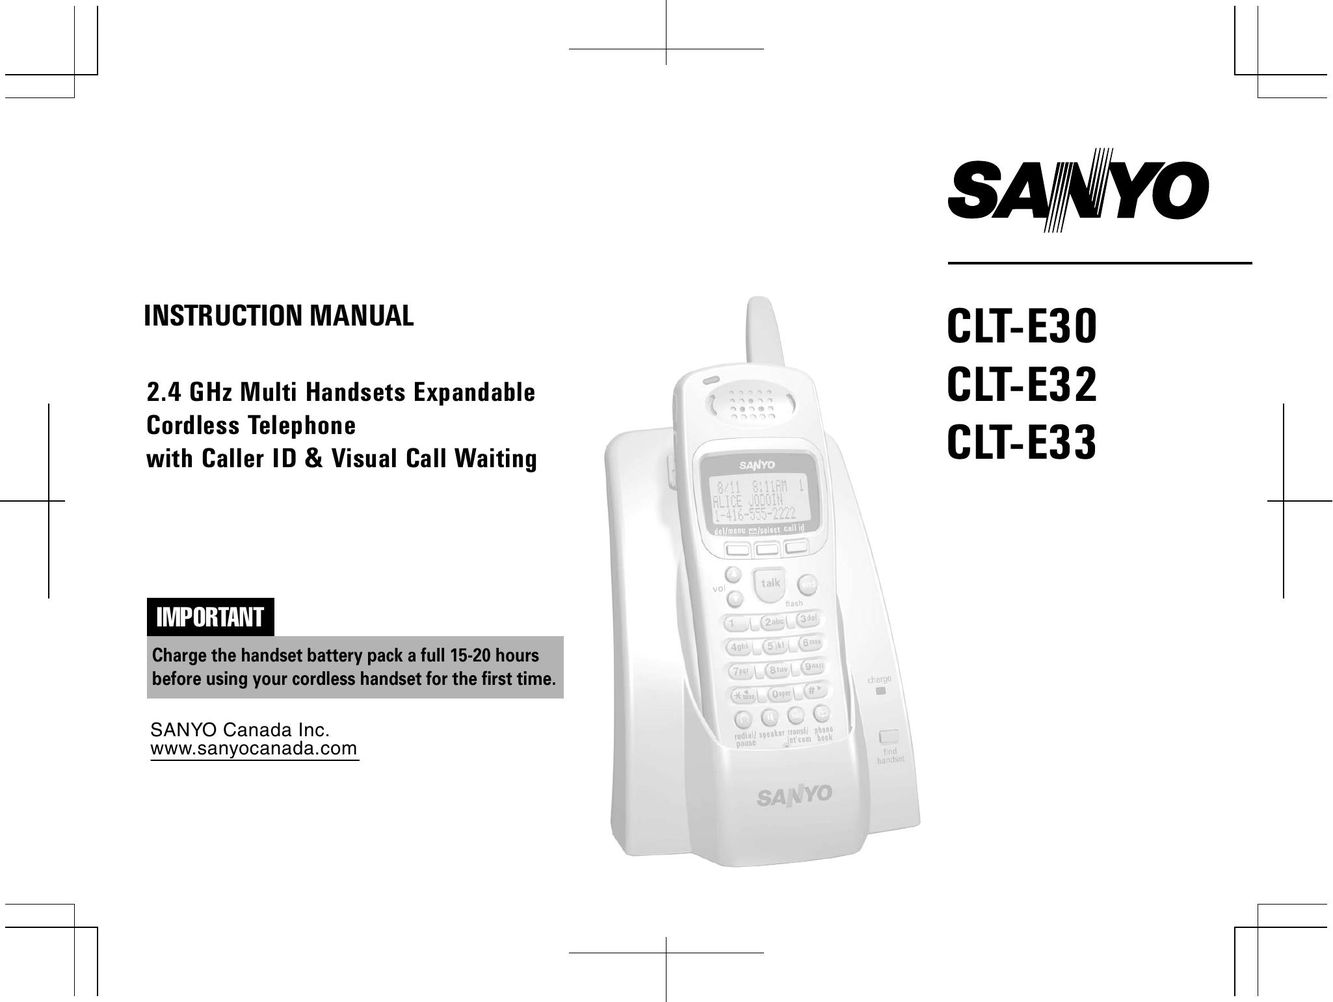 Sanyo CLT-E33 Cordless Telephone User Manual